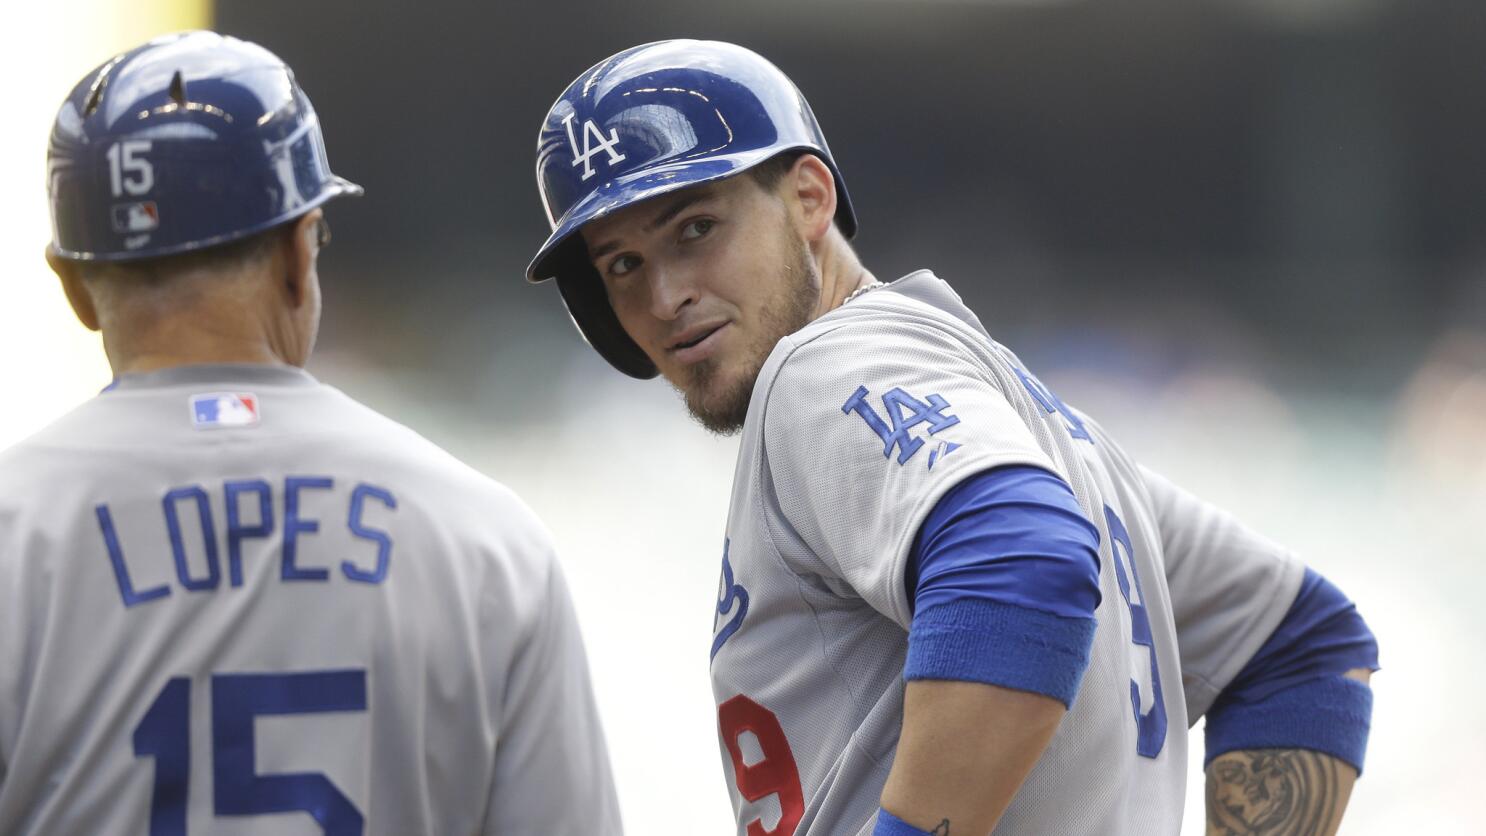 Dodgers activate Yasmani Grandal, return Chris Heisey to minors